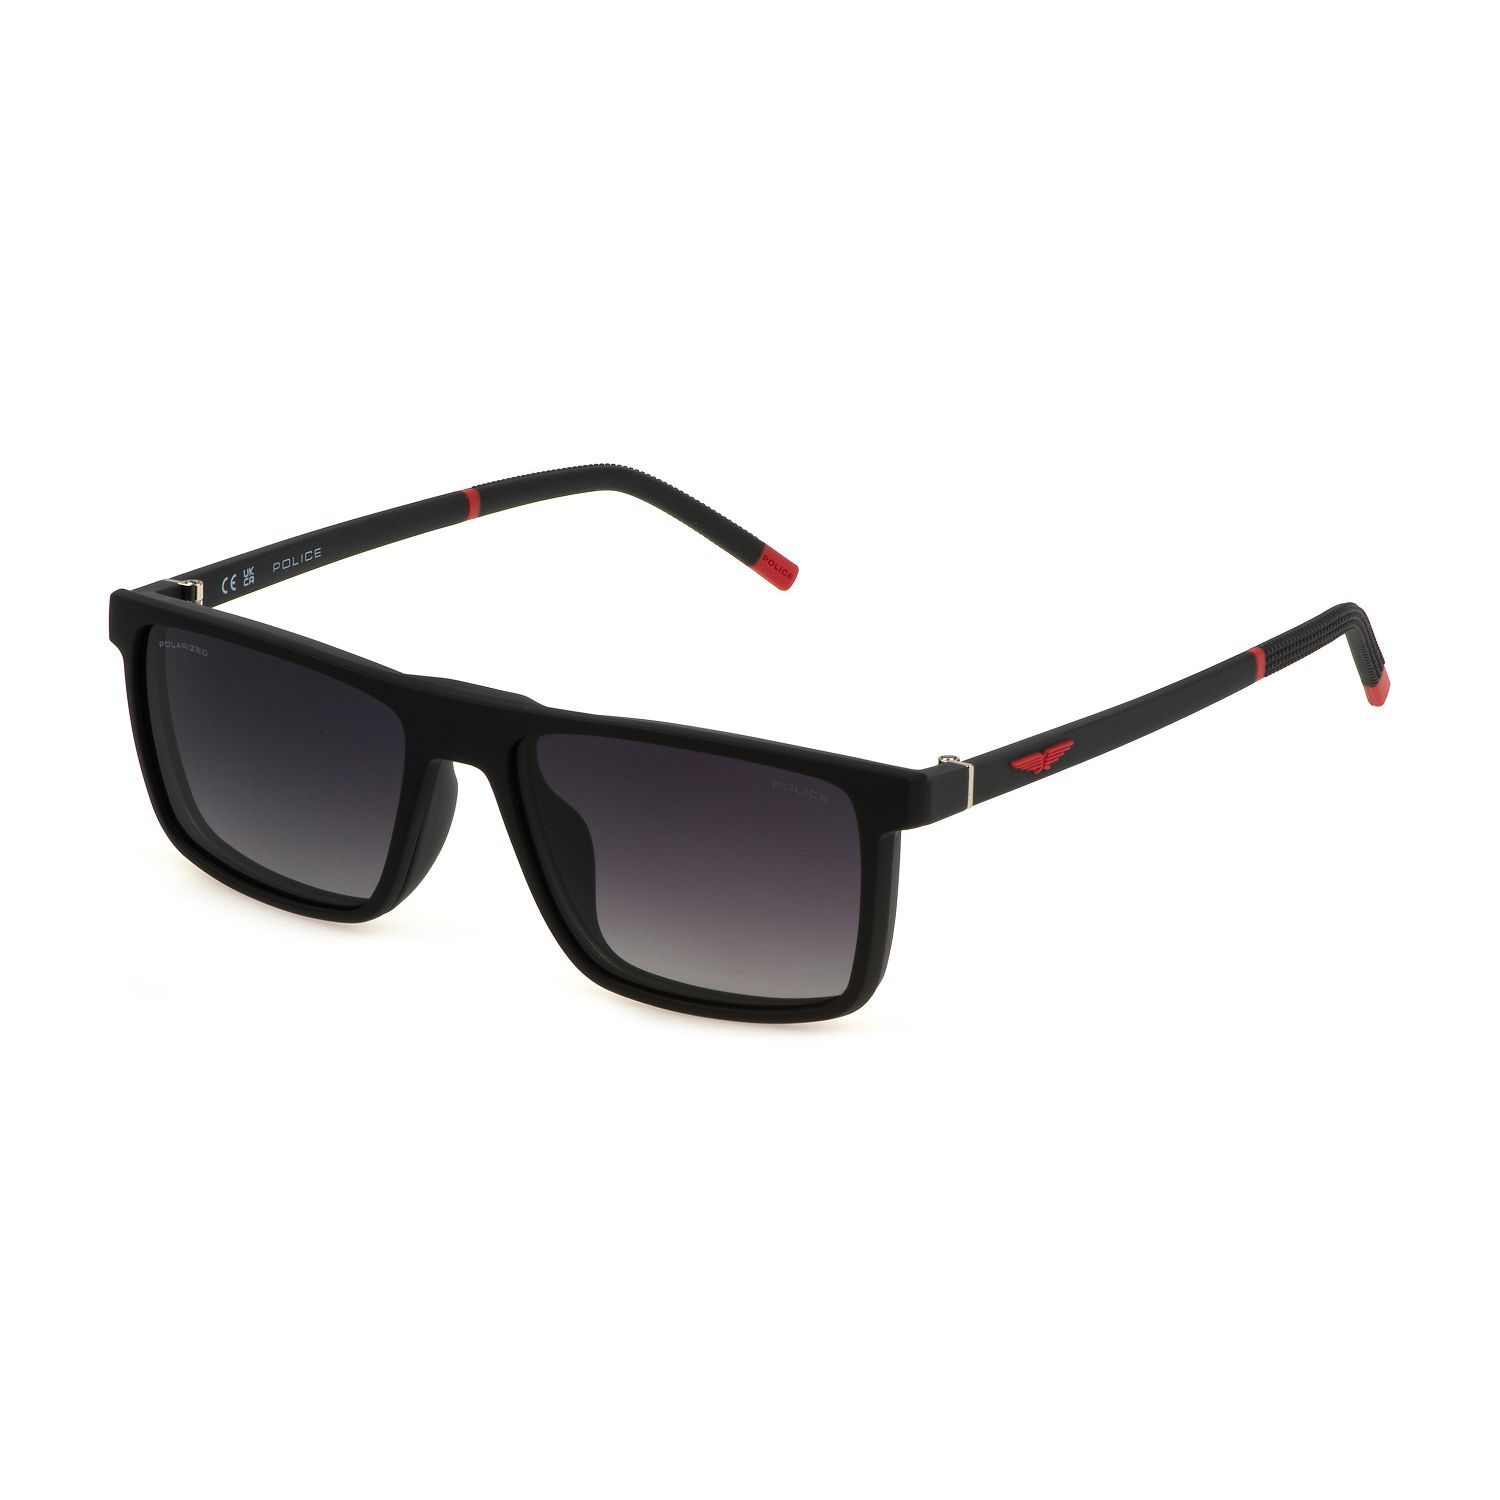 UPLL74M Square Sunglasses I41P - size 54